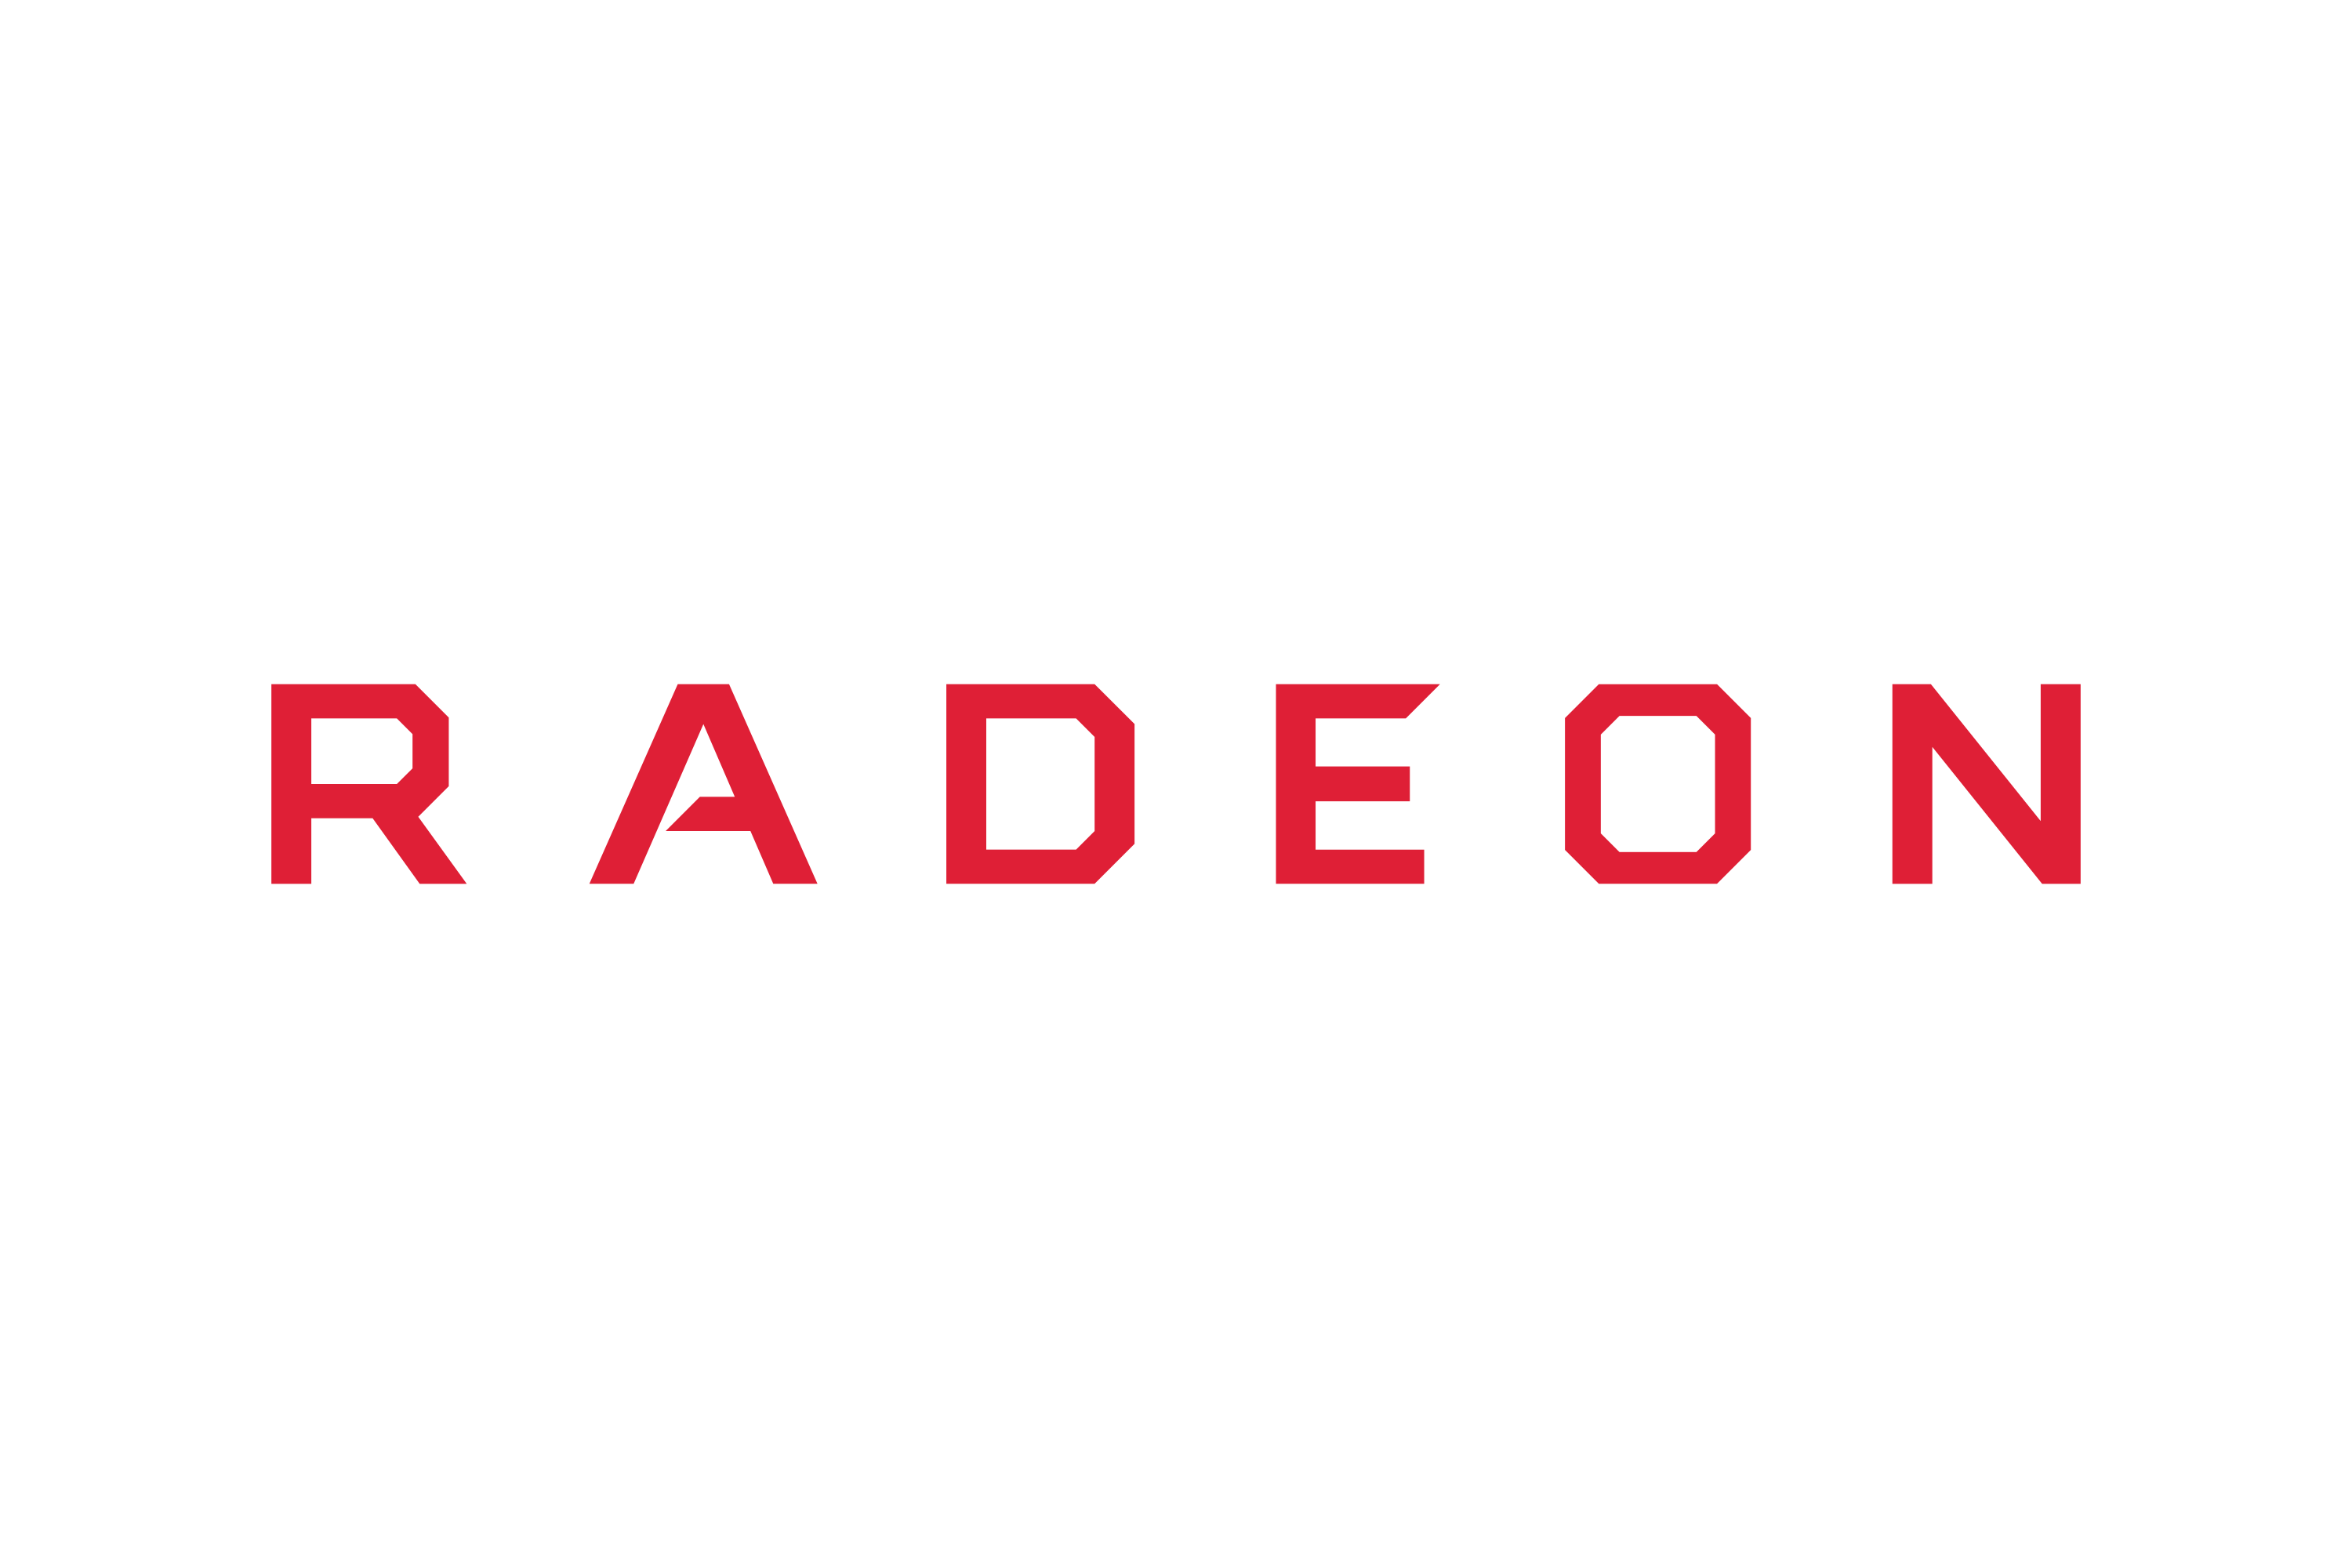 Download Radeon Logo in SVG Vector or PNG File Format - Logo.wine